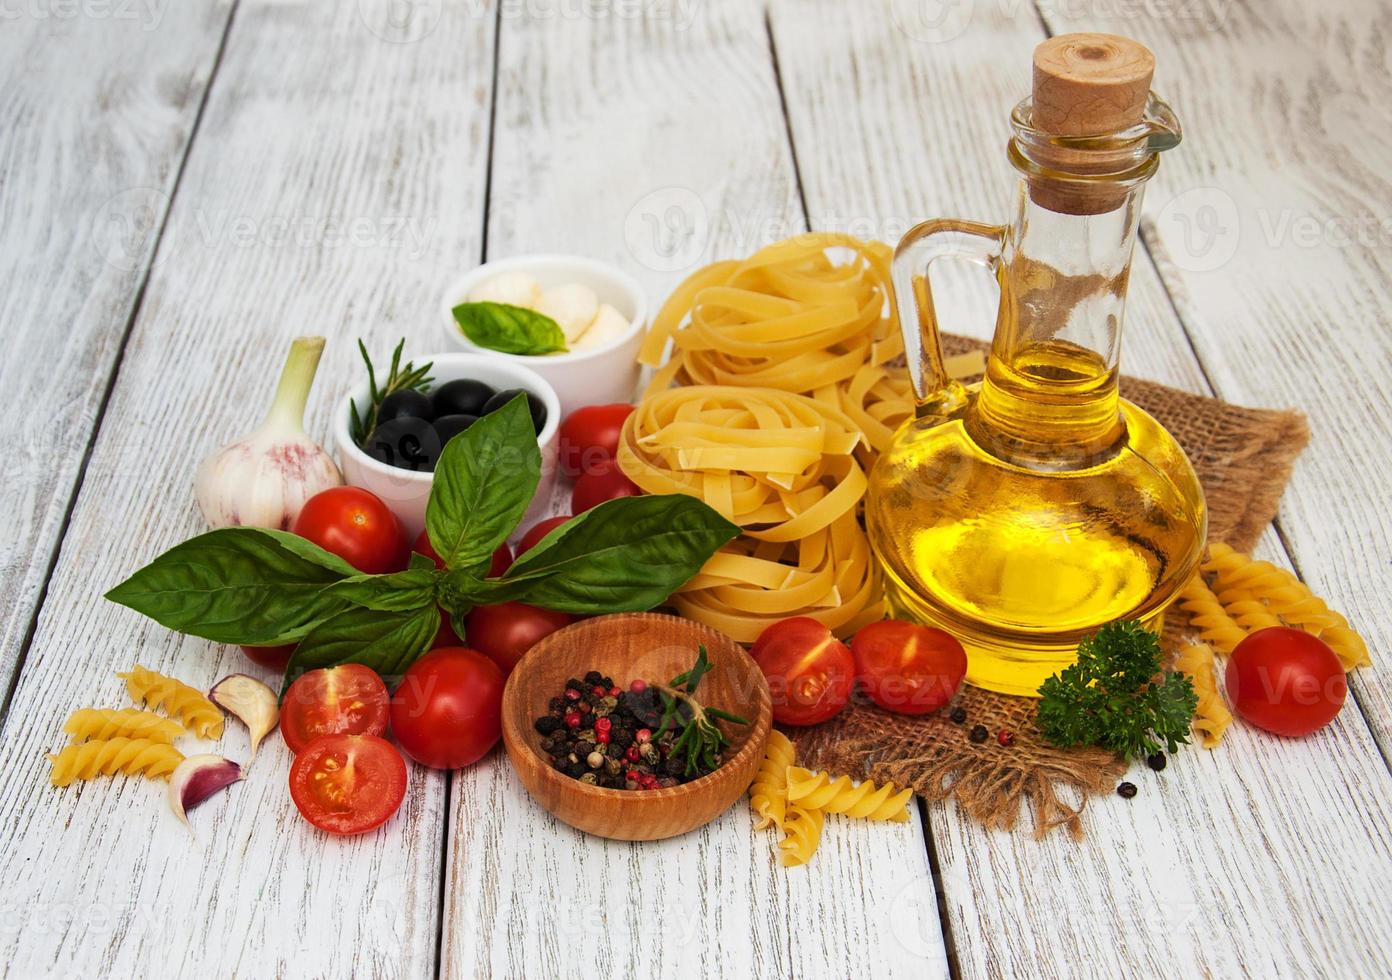 ingredientes de comida italiana foto